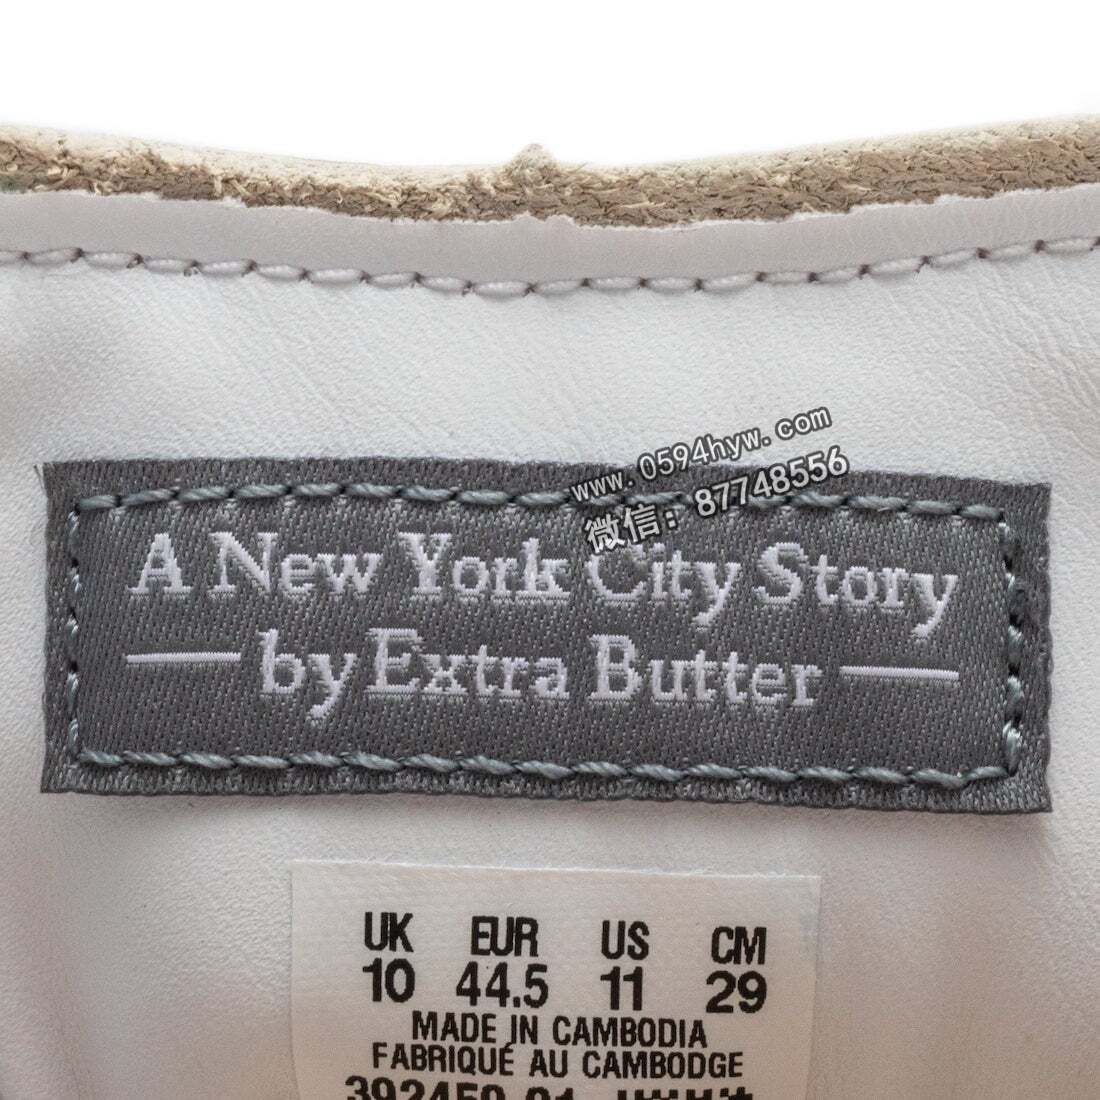 PUMA Clyde, Puma, NY, Extra Butter x PUMA Clyde “NYC”, Extra Butter, 392450-01